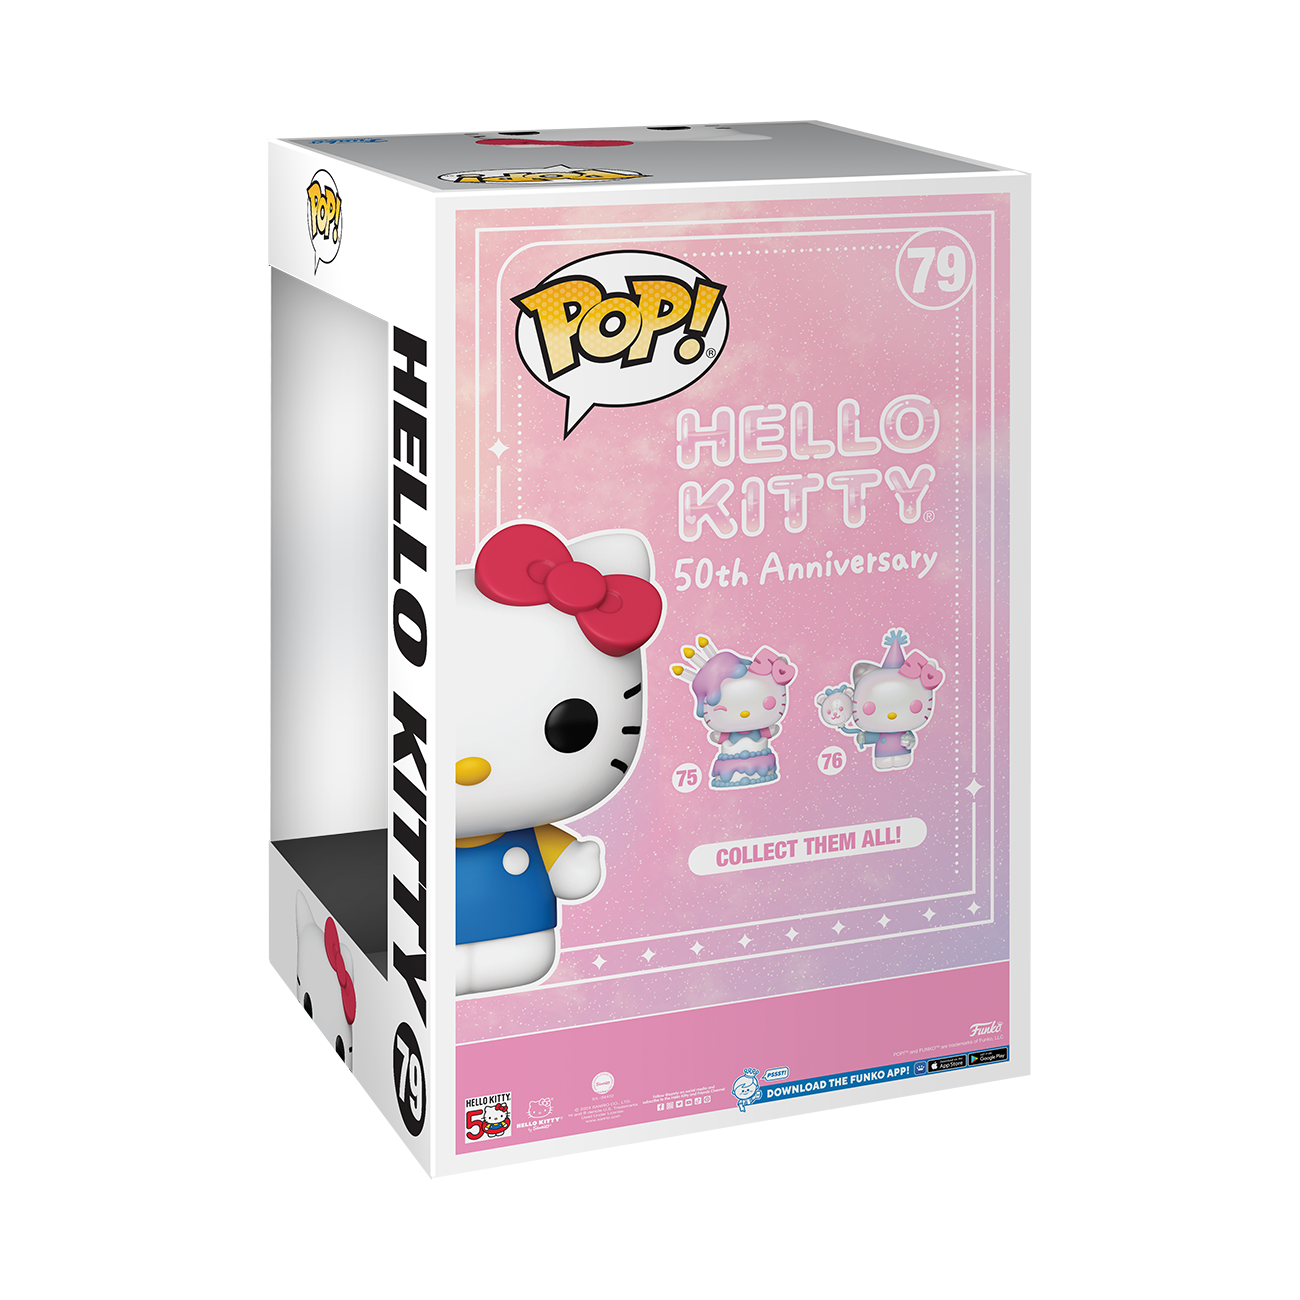 https://media.gamestop.com/i/gamestop/20007876_ALT02/Funko-POP-Jumbo-Sanrio-Hello-Kitty-50th-Anniversary---Hello-Kitty-8.15-in-Vinyl-Figure?$pdp$